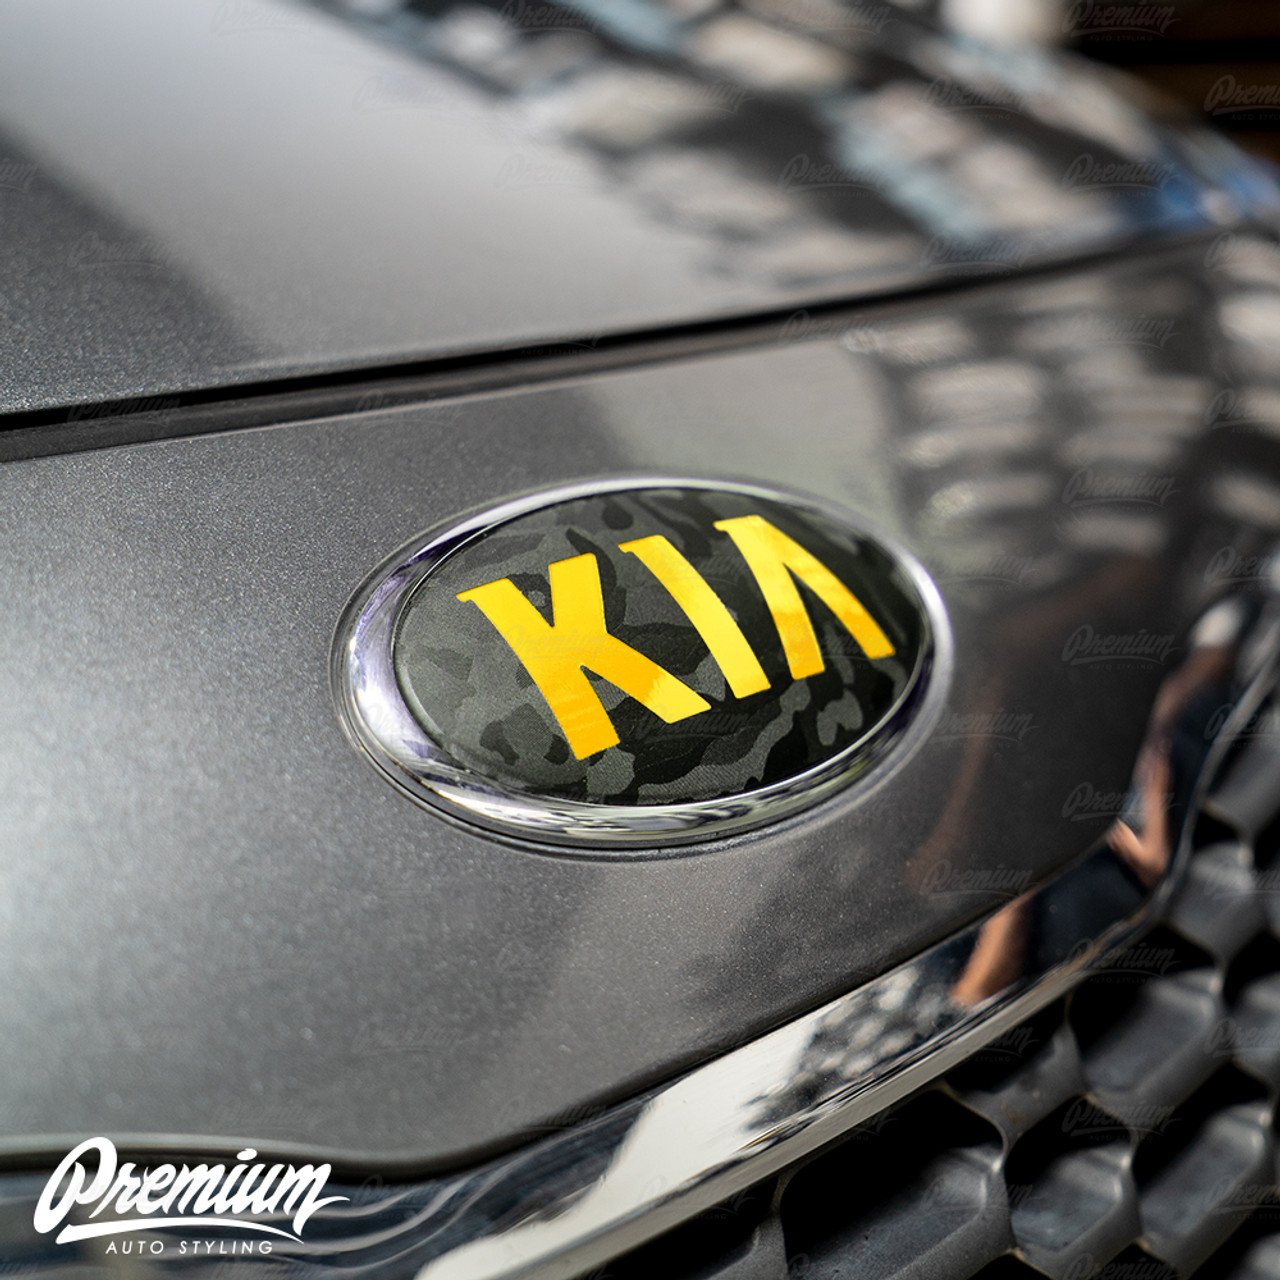 KIA Radiator grille emblem with GT line logo